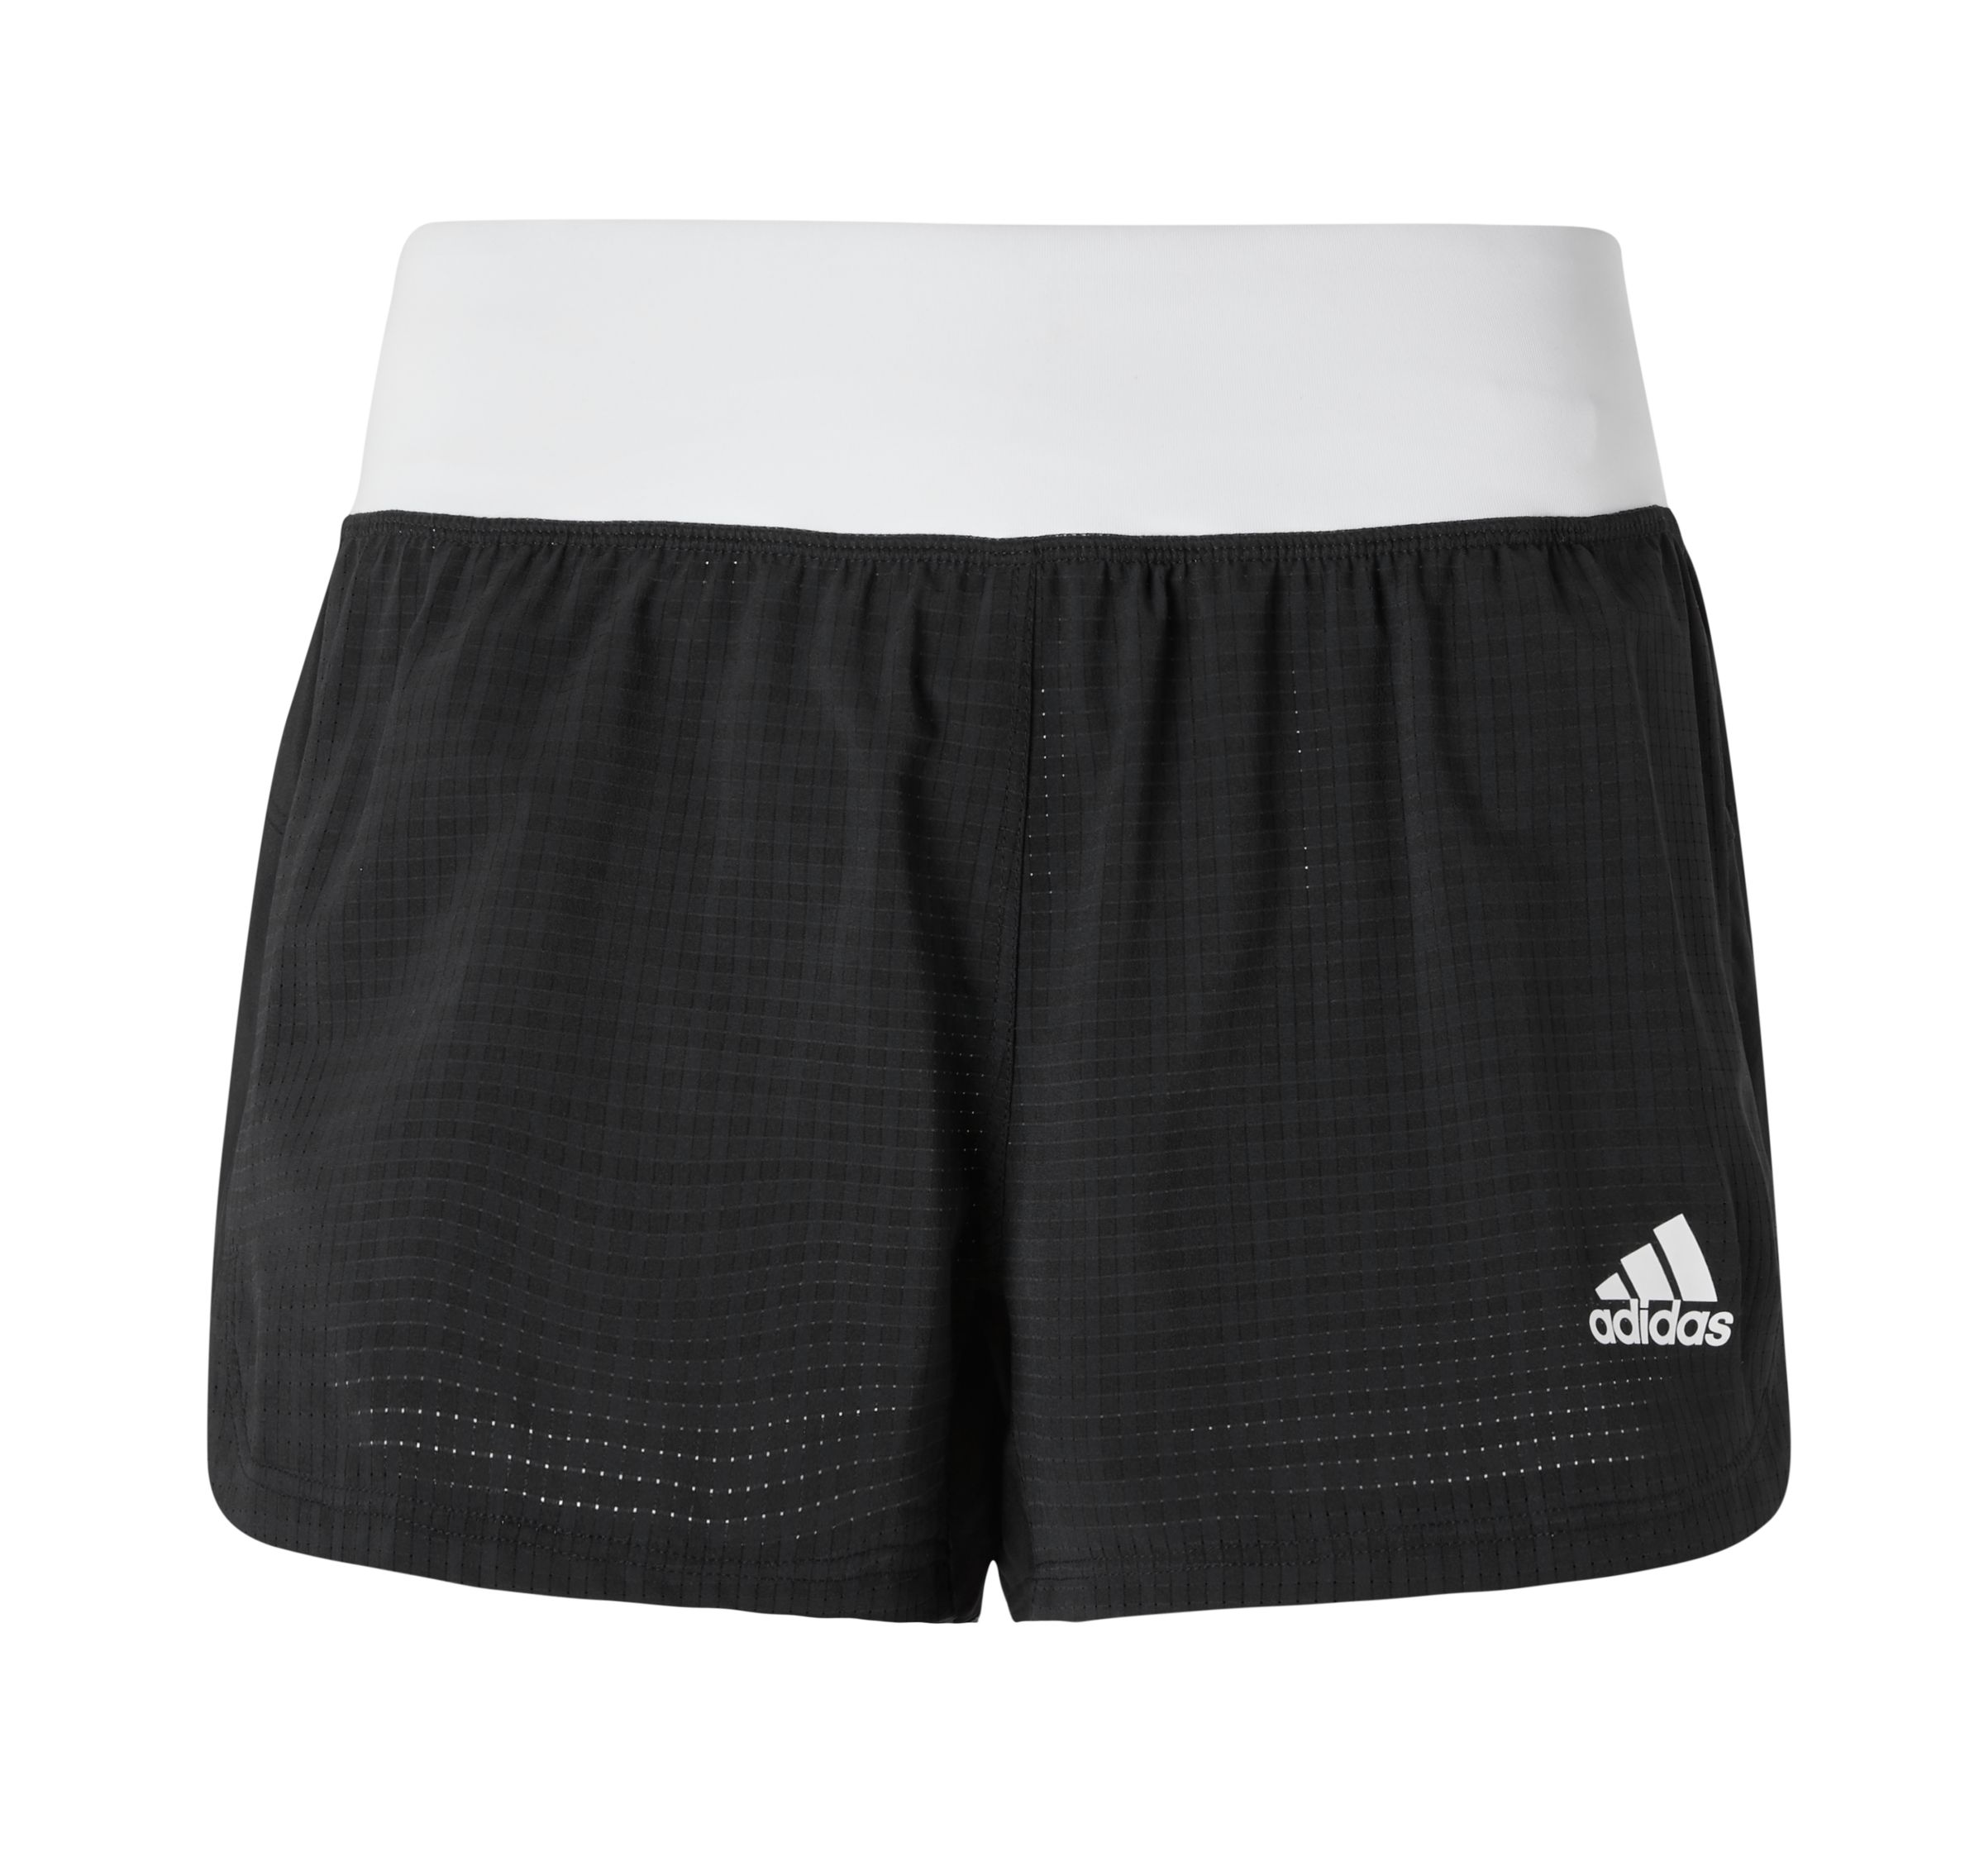 adidas 2-in-1 Shorts, Black/White